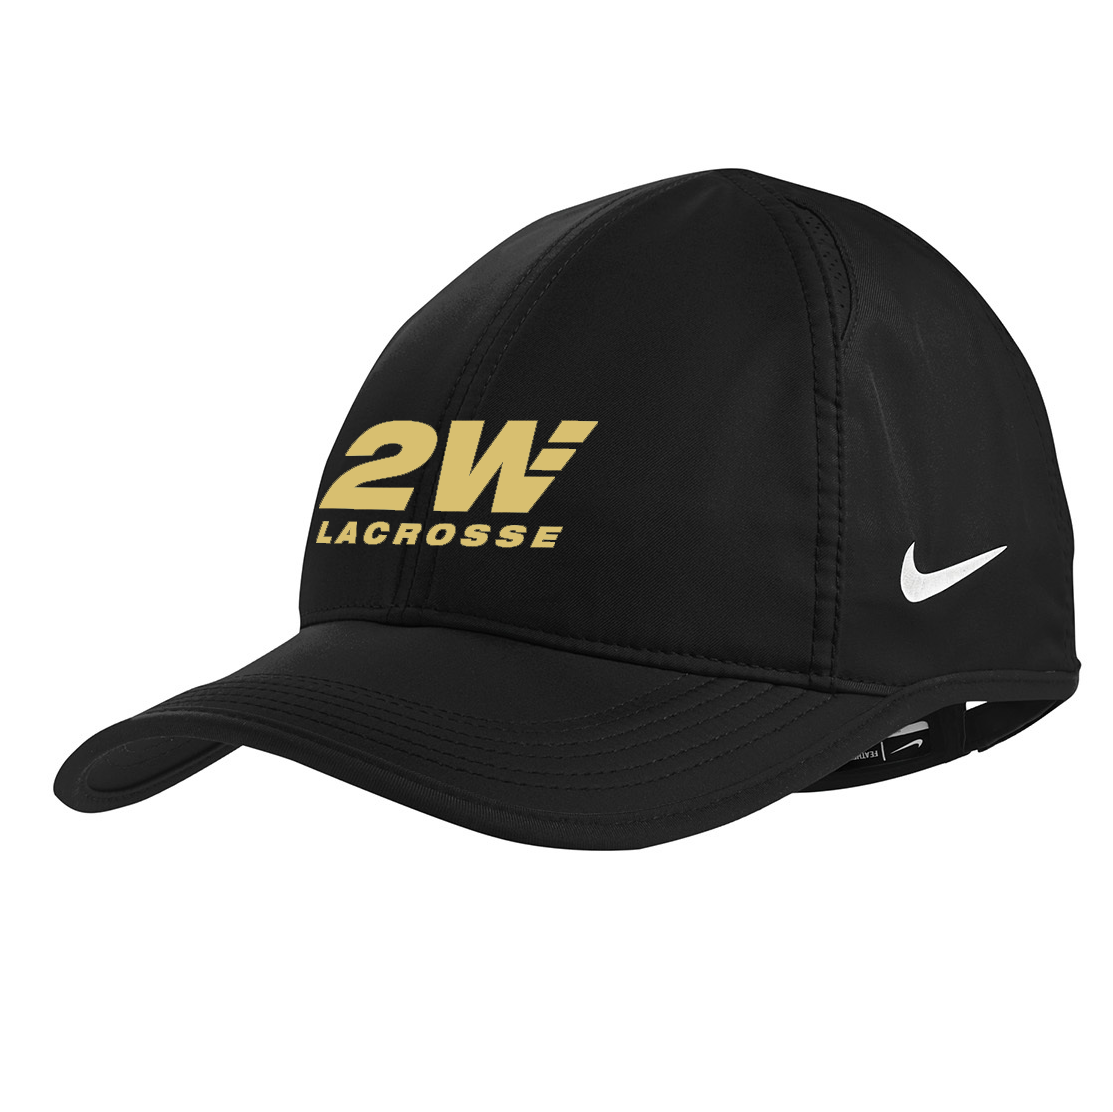 2Way Lacrosse North Nike Featherlight Cap